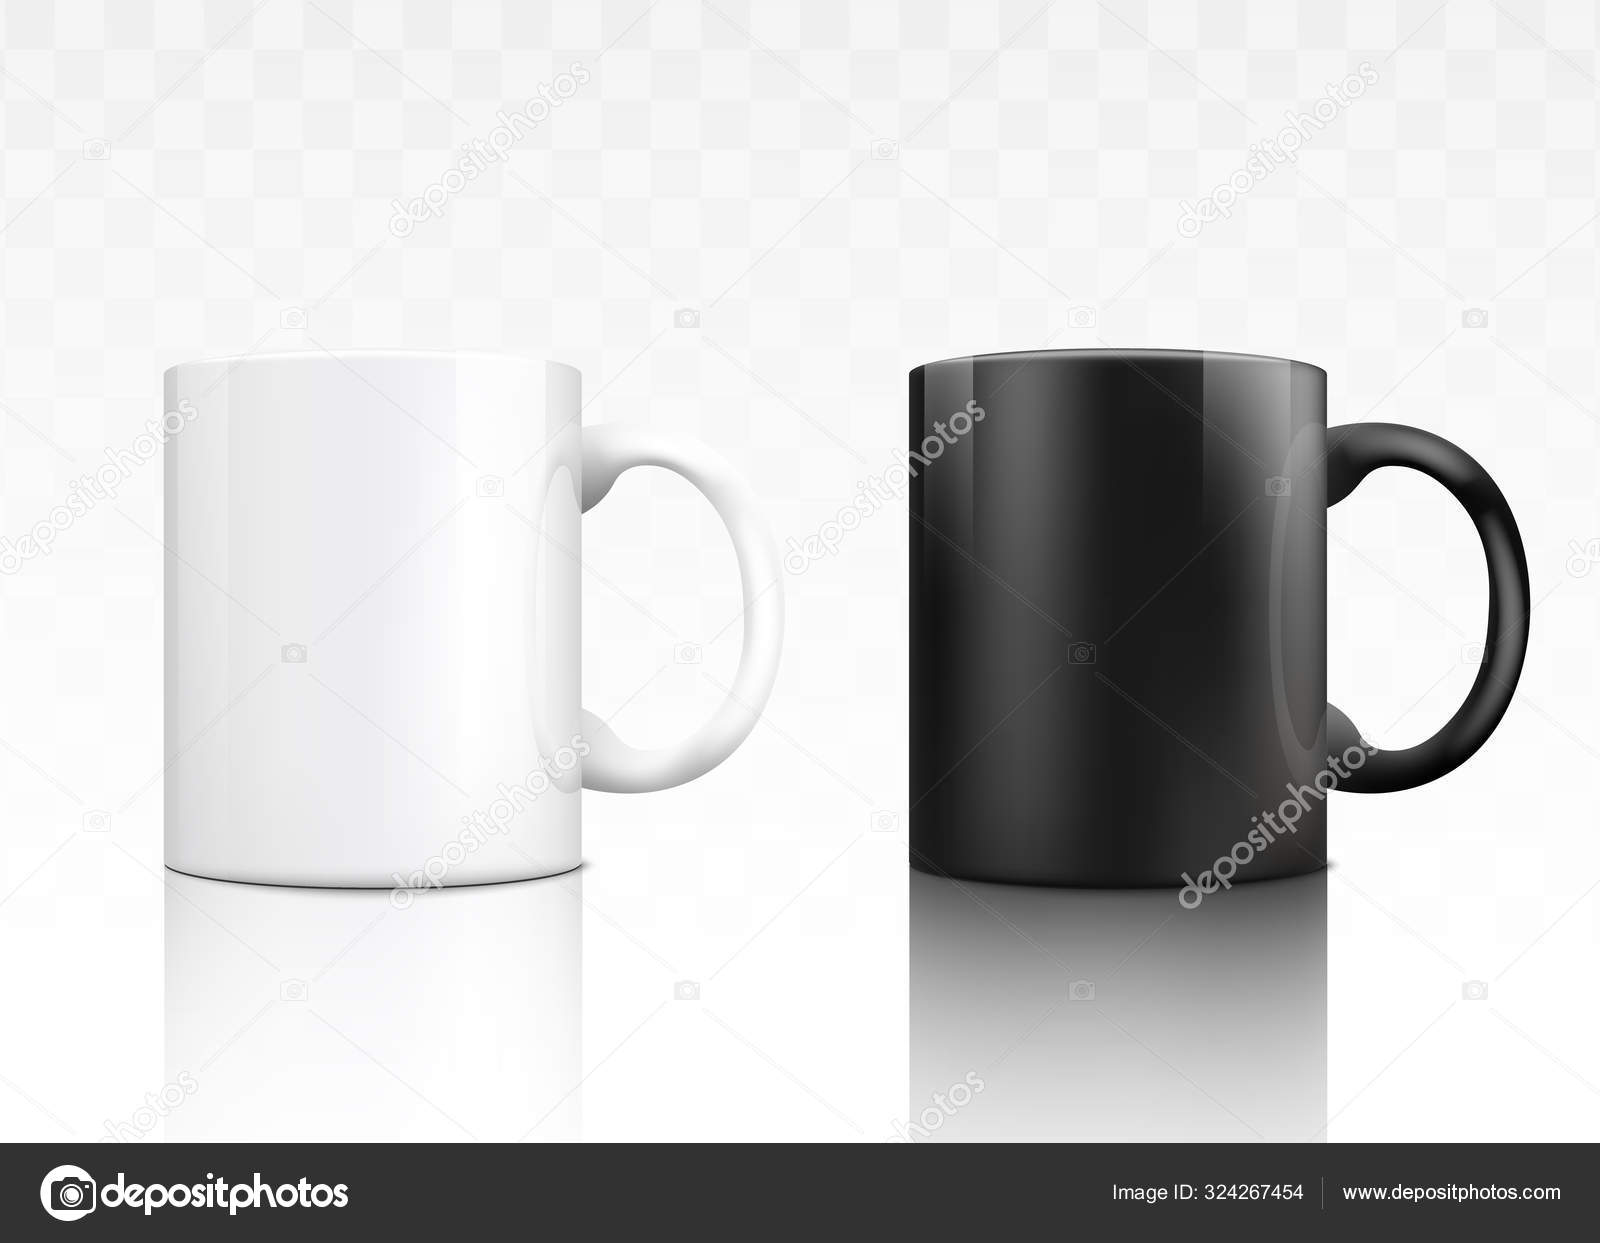 https://st3.depositphotos.com/1832477/32426/v/1600/depositphotos_324267454-stock-illustration-classic-ceramic-tea-mug-set.jpg